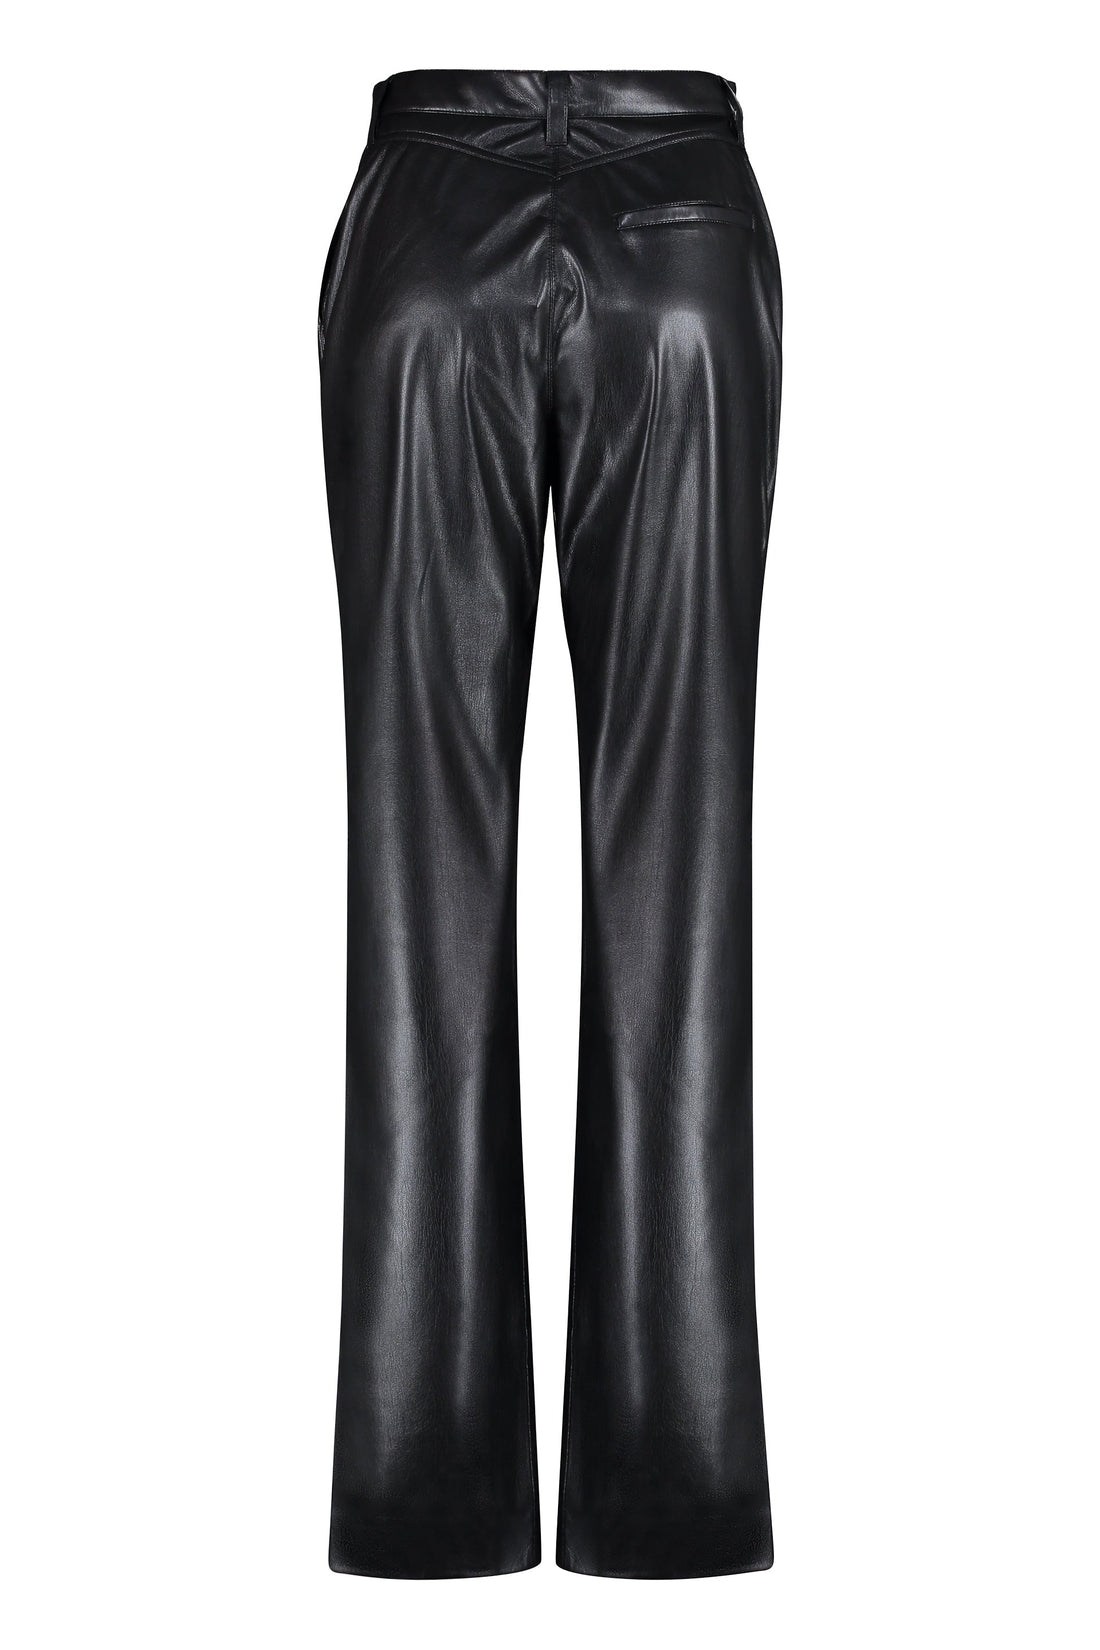 Nanushka-OUTLET-SALE-Masa alter-nappa trousers-ARCHIVIST